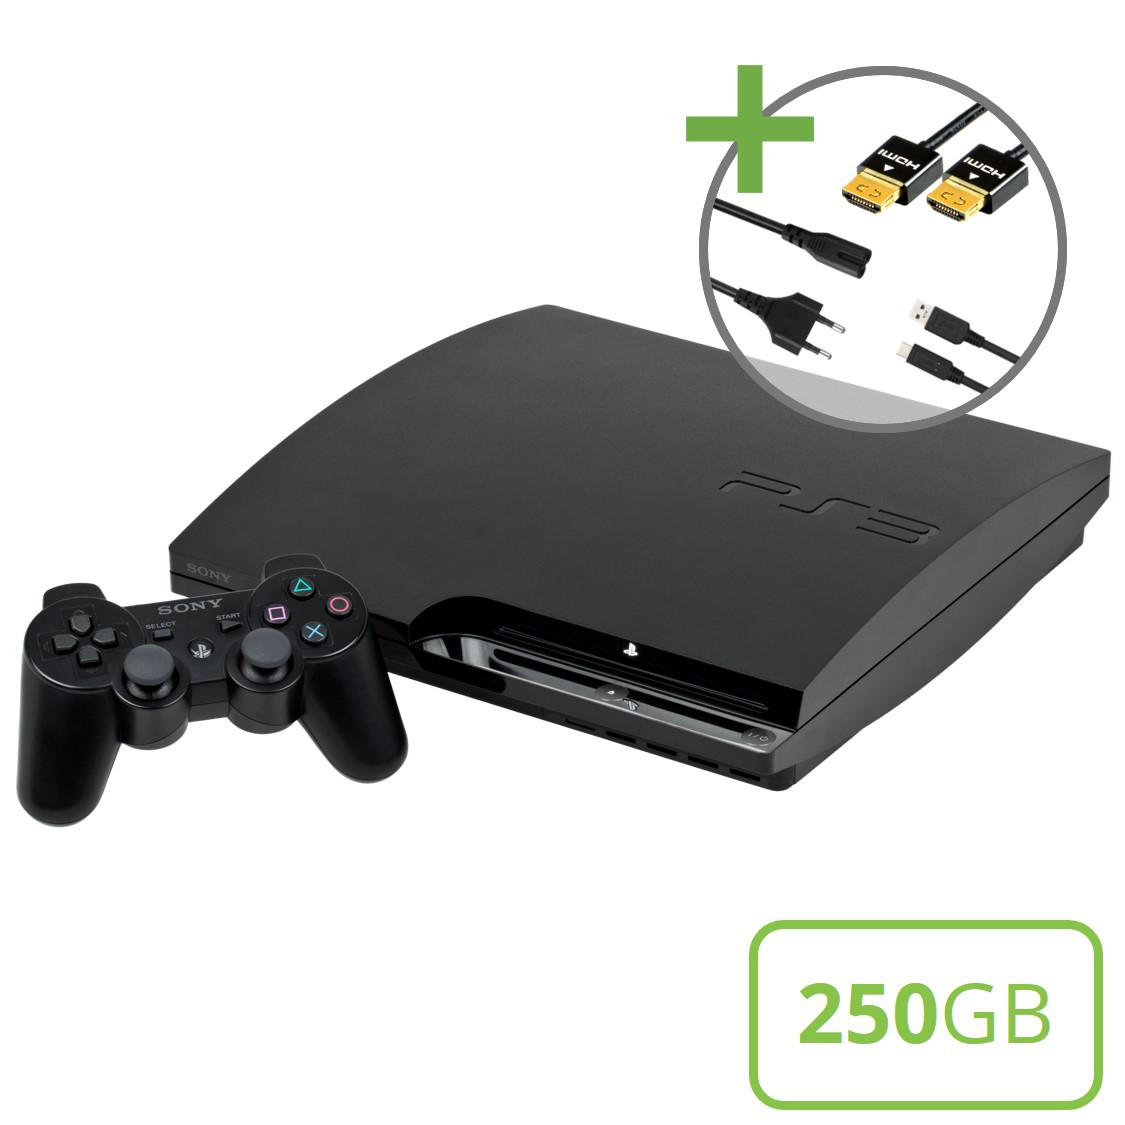 Sony PlayStation 3 Slim (250GB) Starter Pack - DualShock Edition Kopen | Playstation 3 Hardware